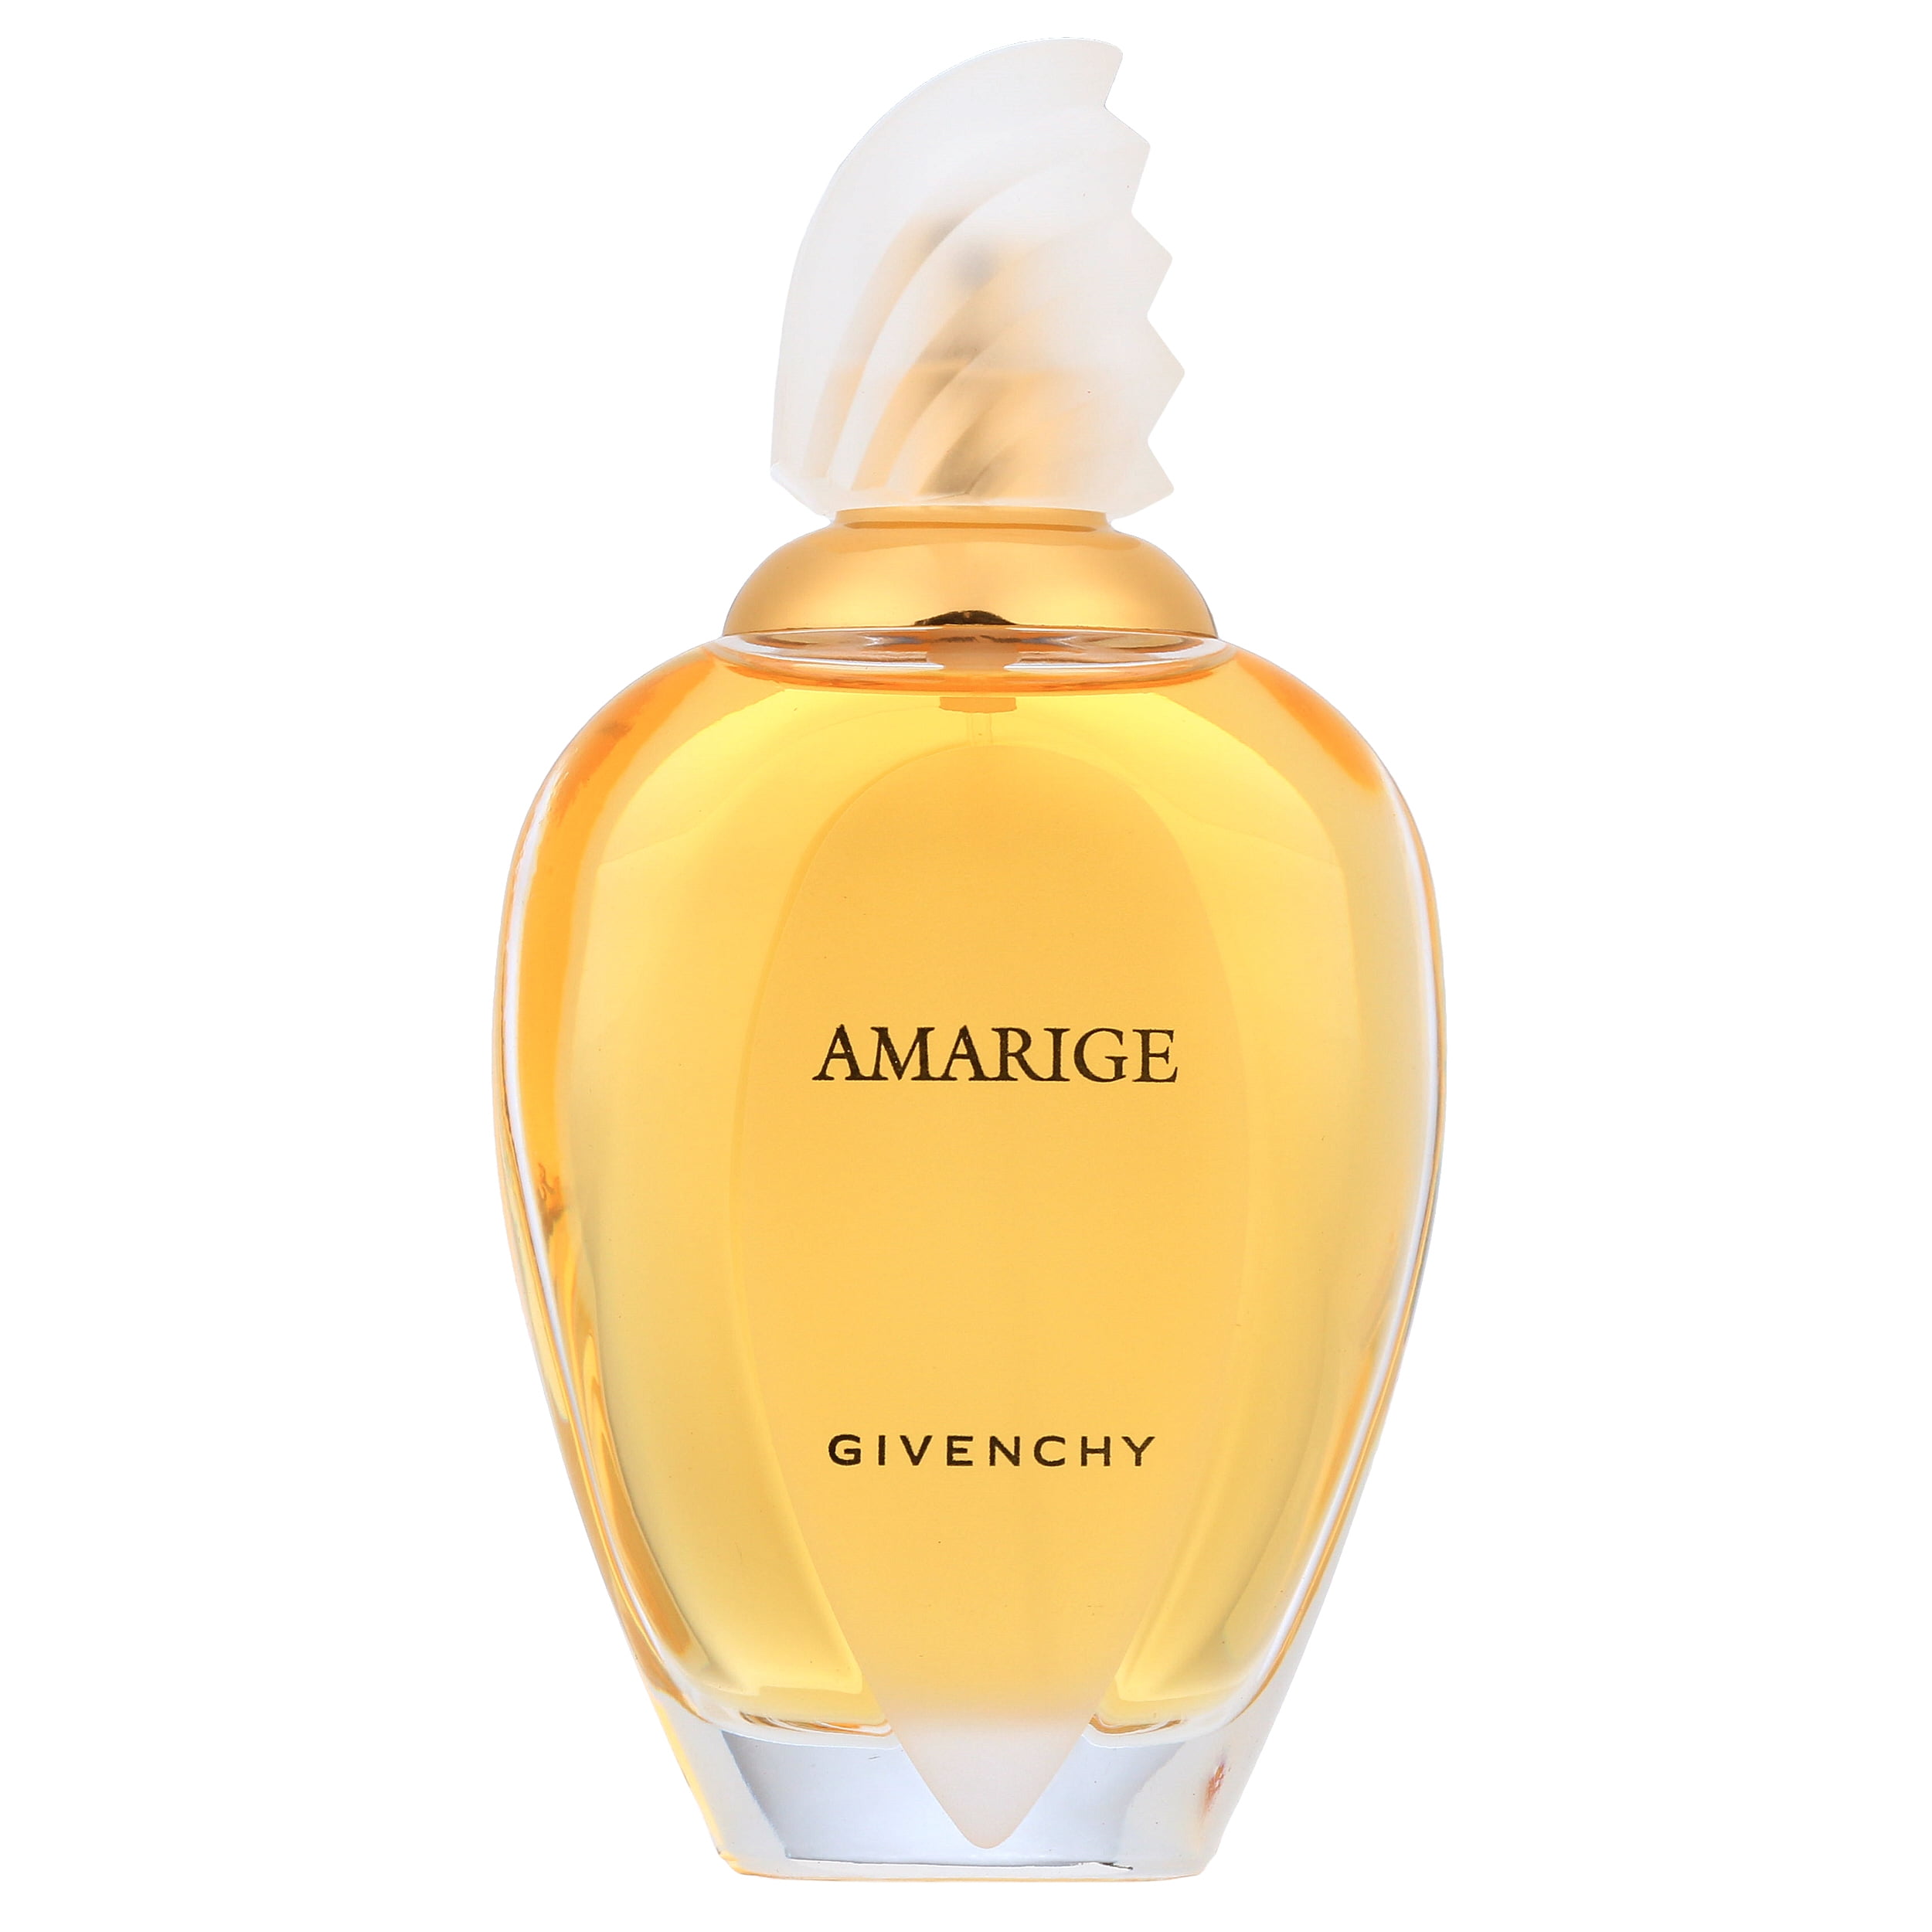 Givenchy Amarige Eau de Toilette Spray, Perfume for Women,  oz -  